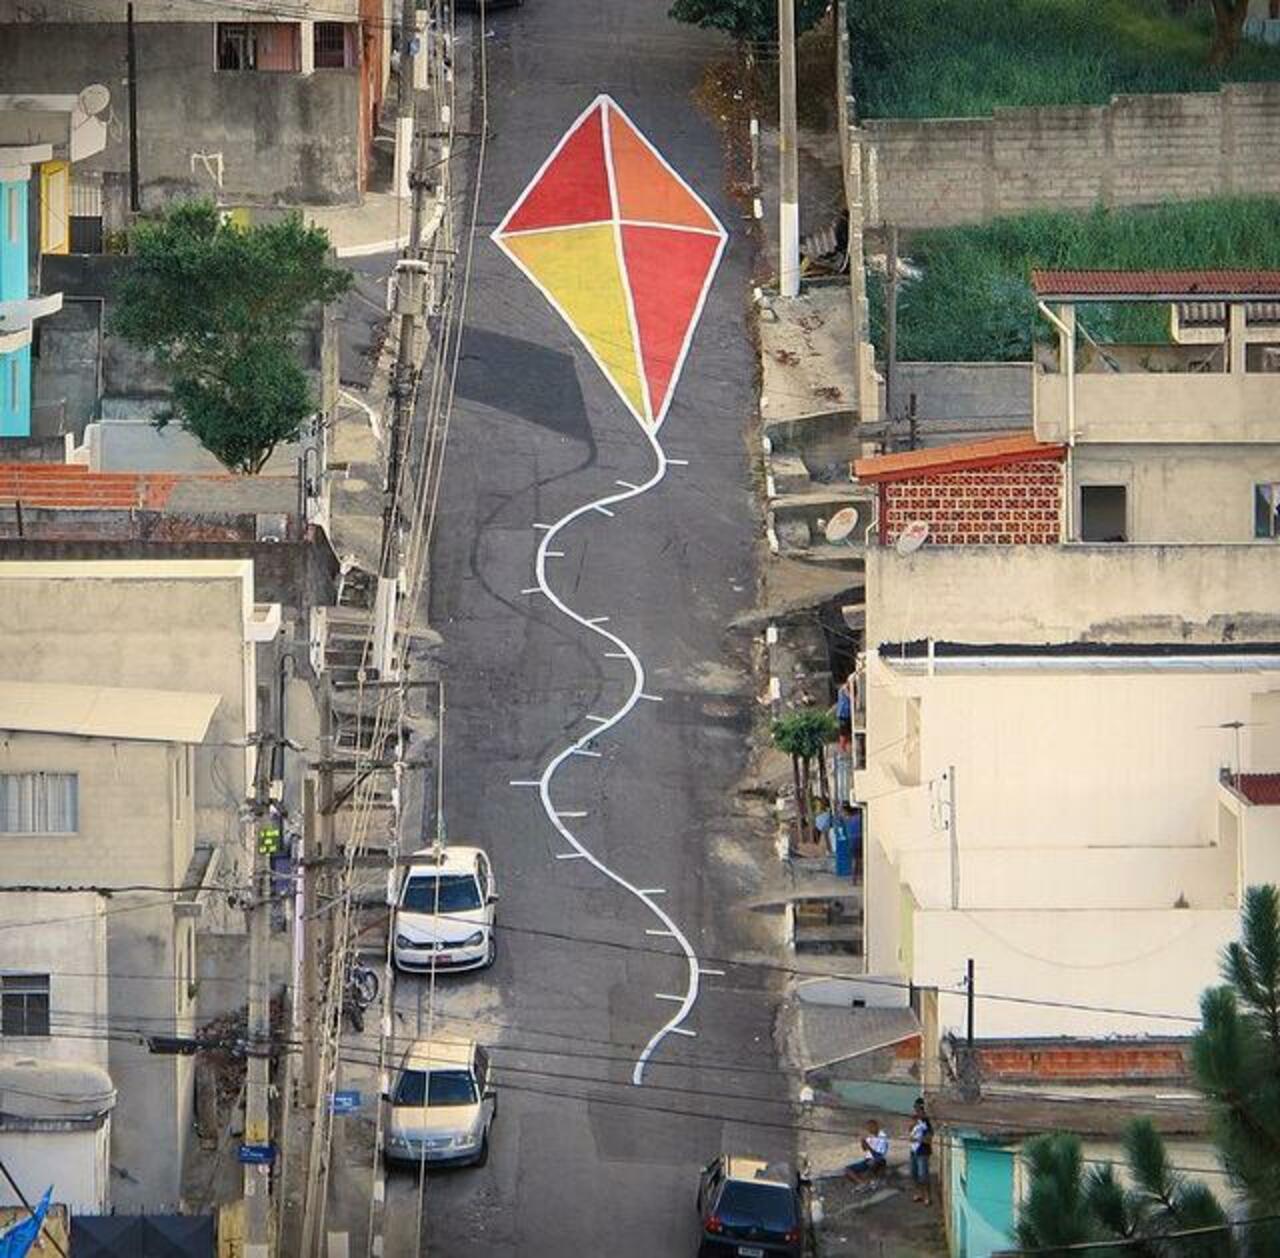 Anamorphic Street Art by Tec Fase in São Paulo 

#art #arte #graffiti #streetart http://t.co/1OJGoN41lr